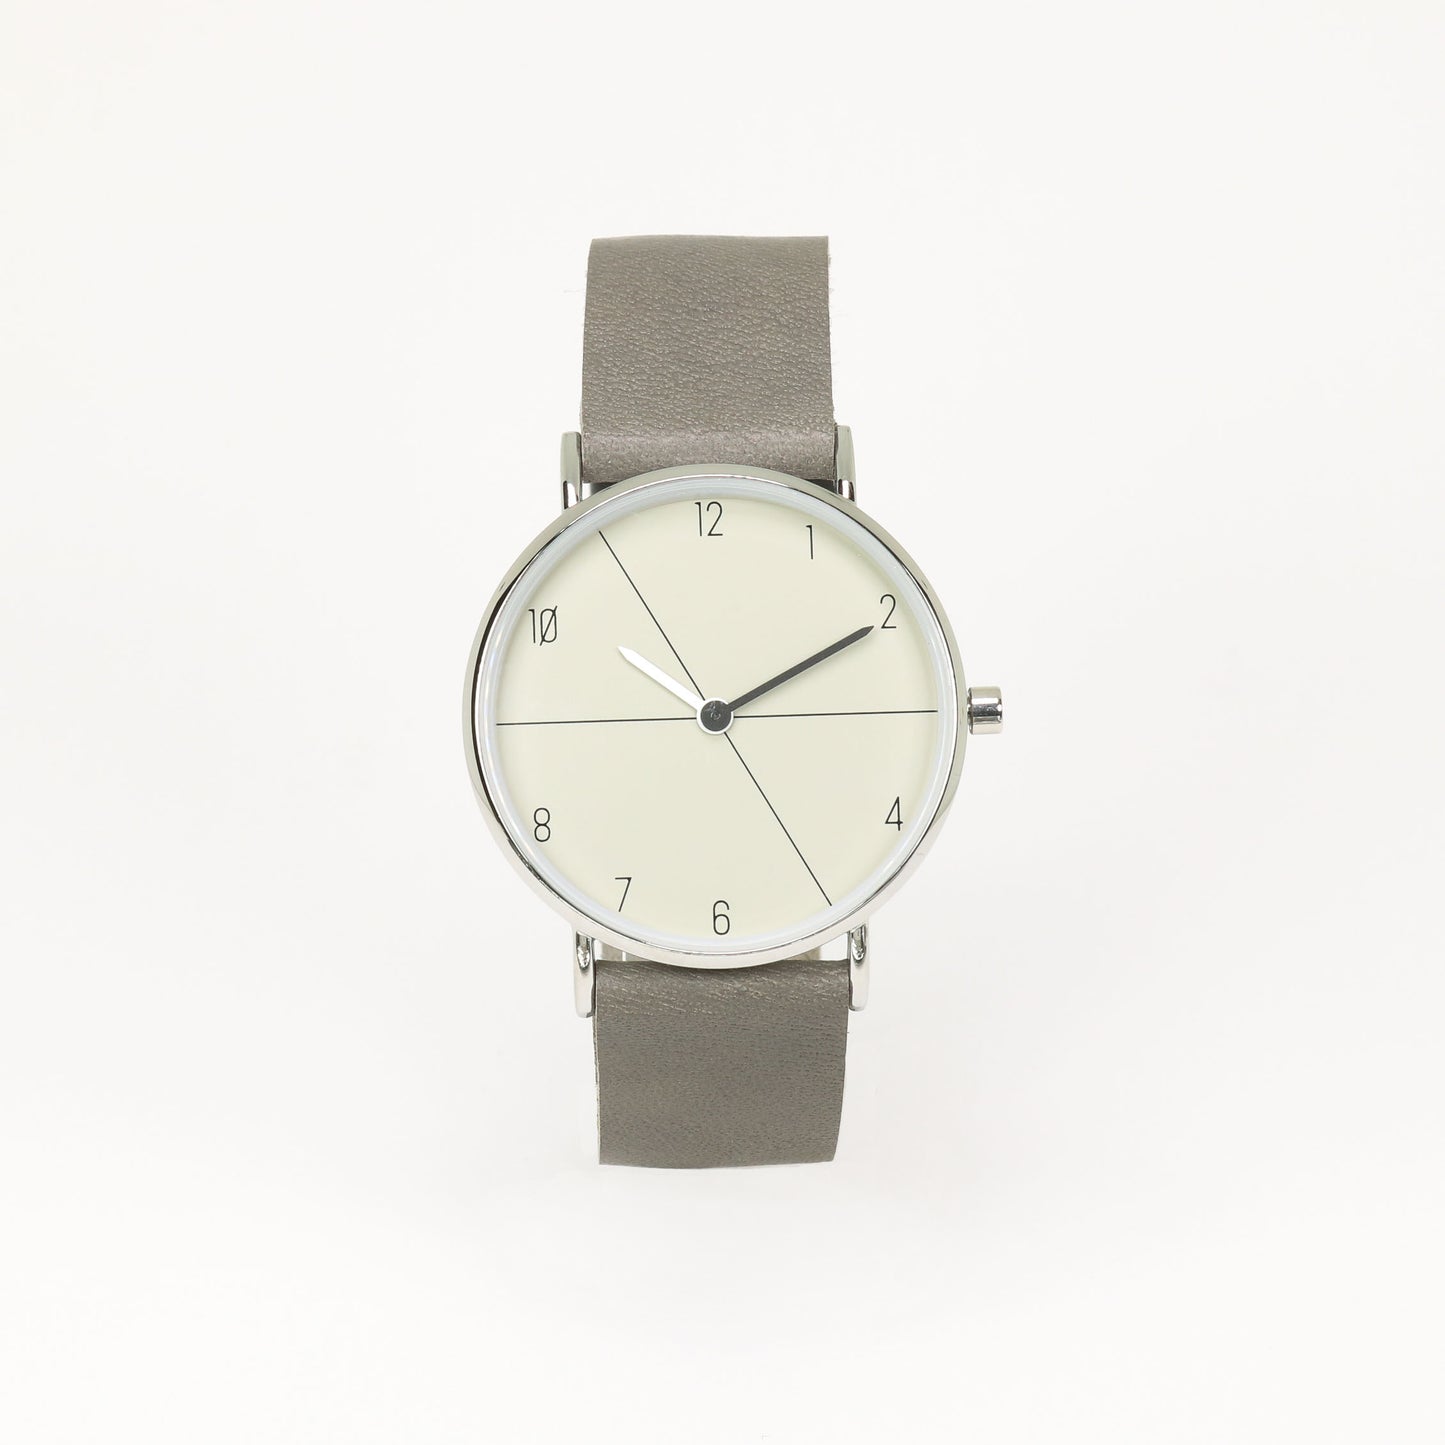 Grey / pale grey watch